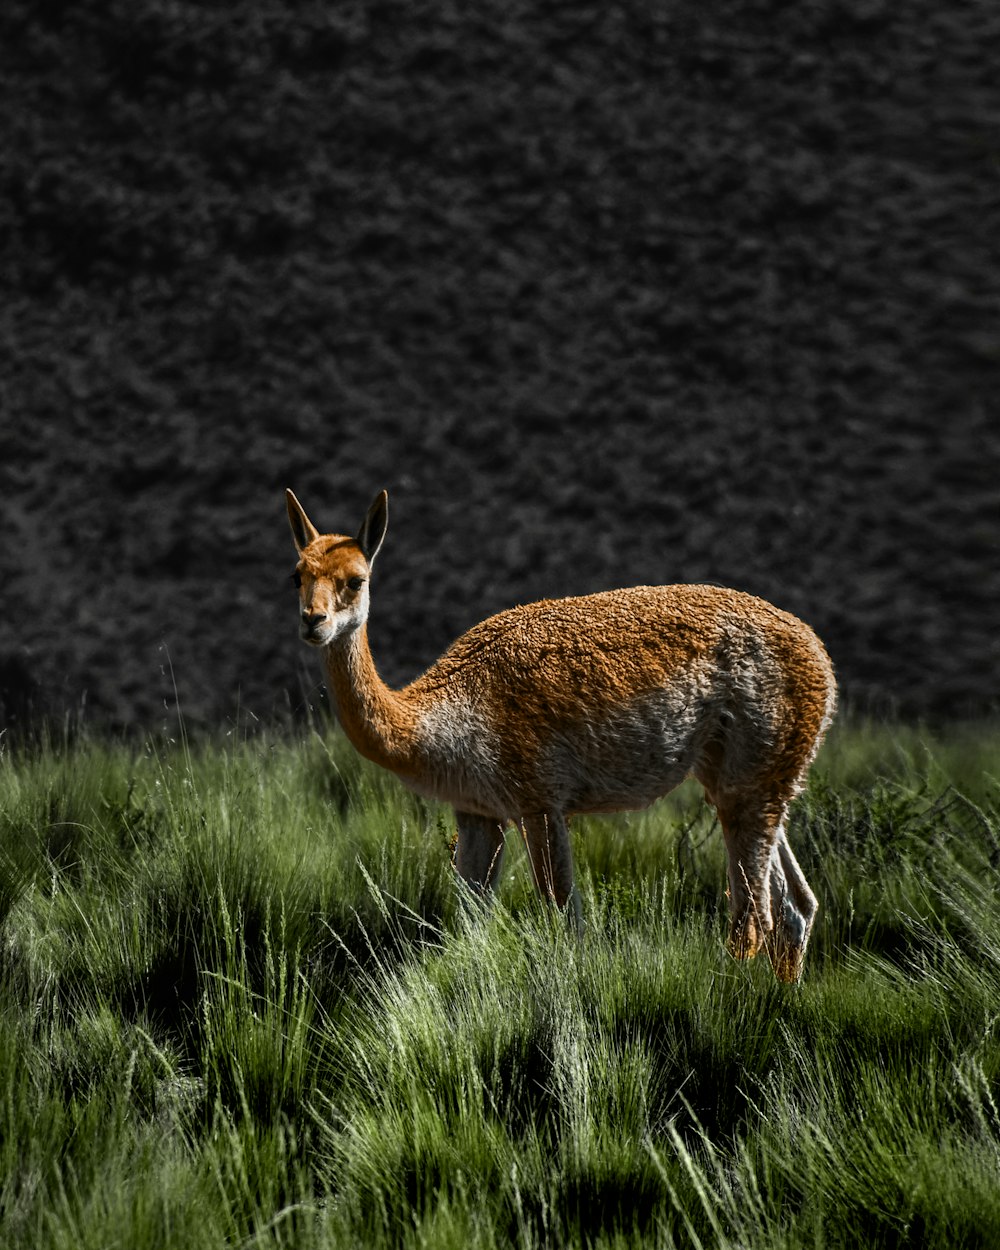 a deer is standing in a grassy field